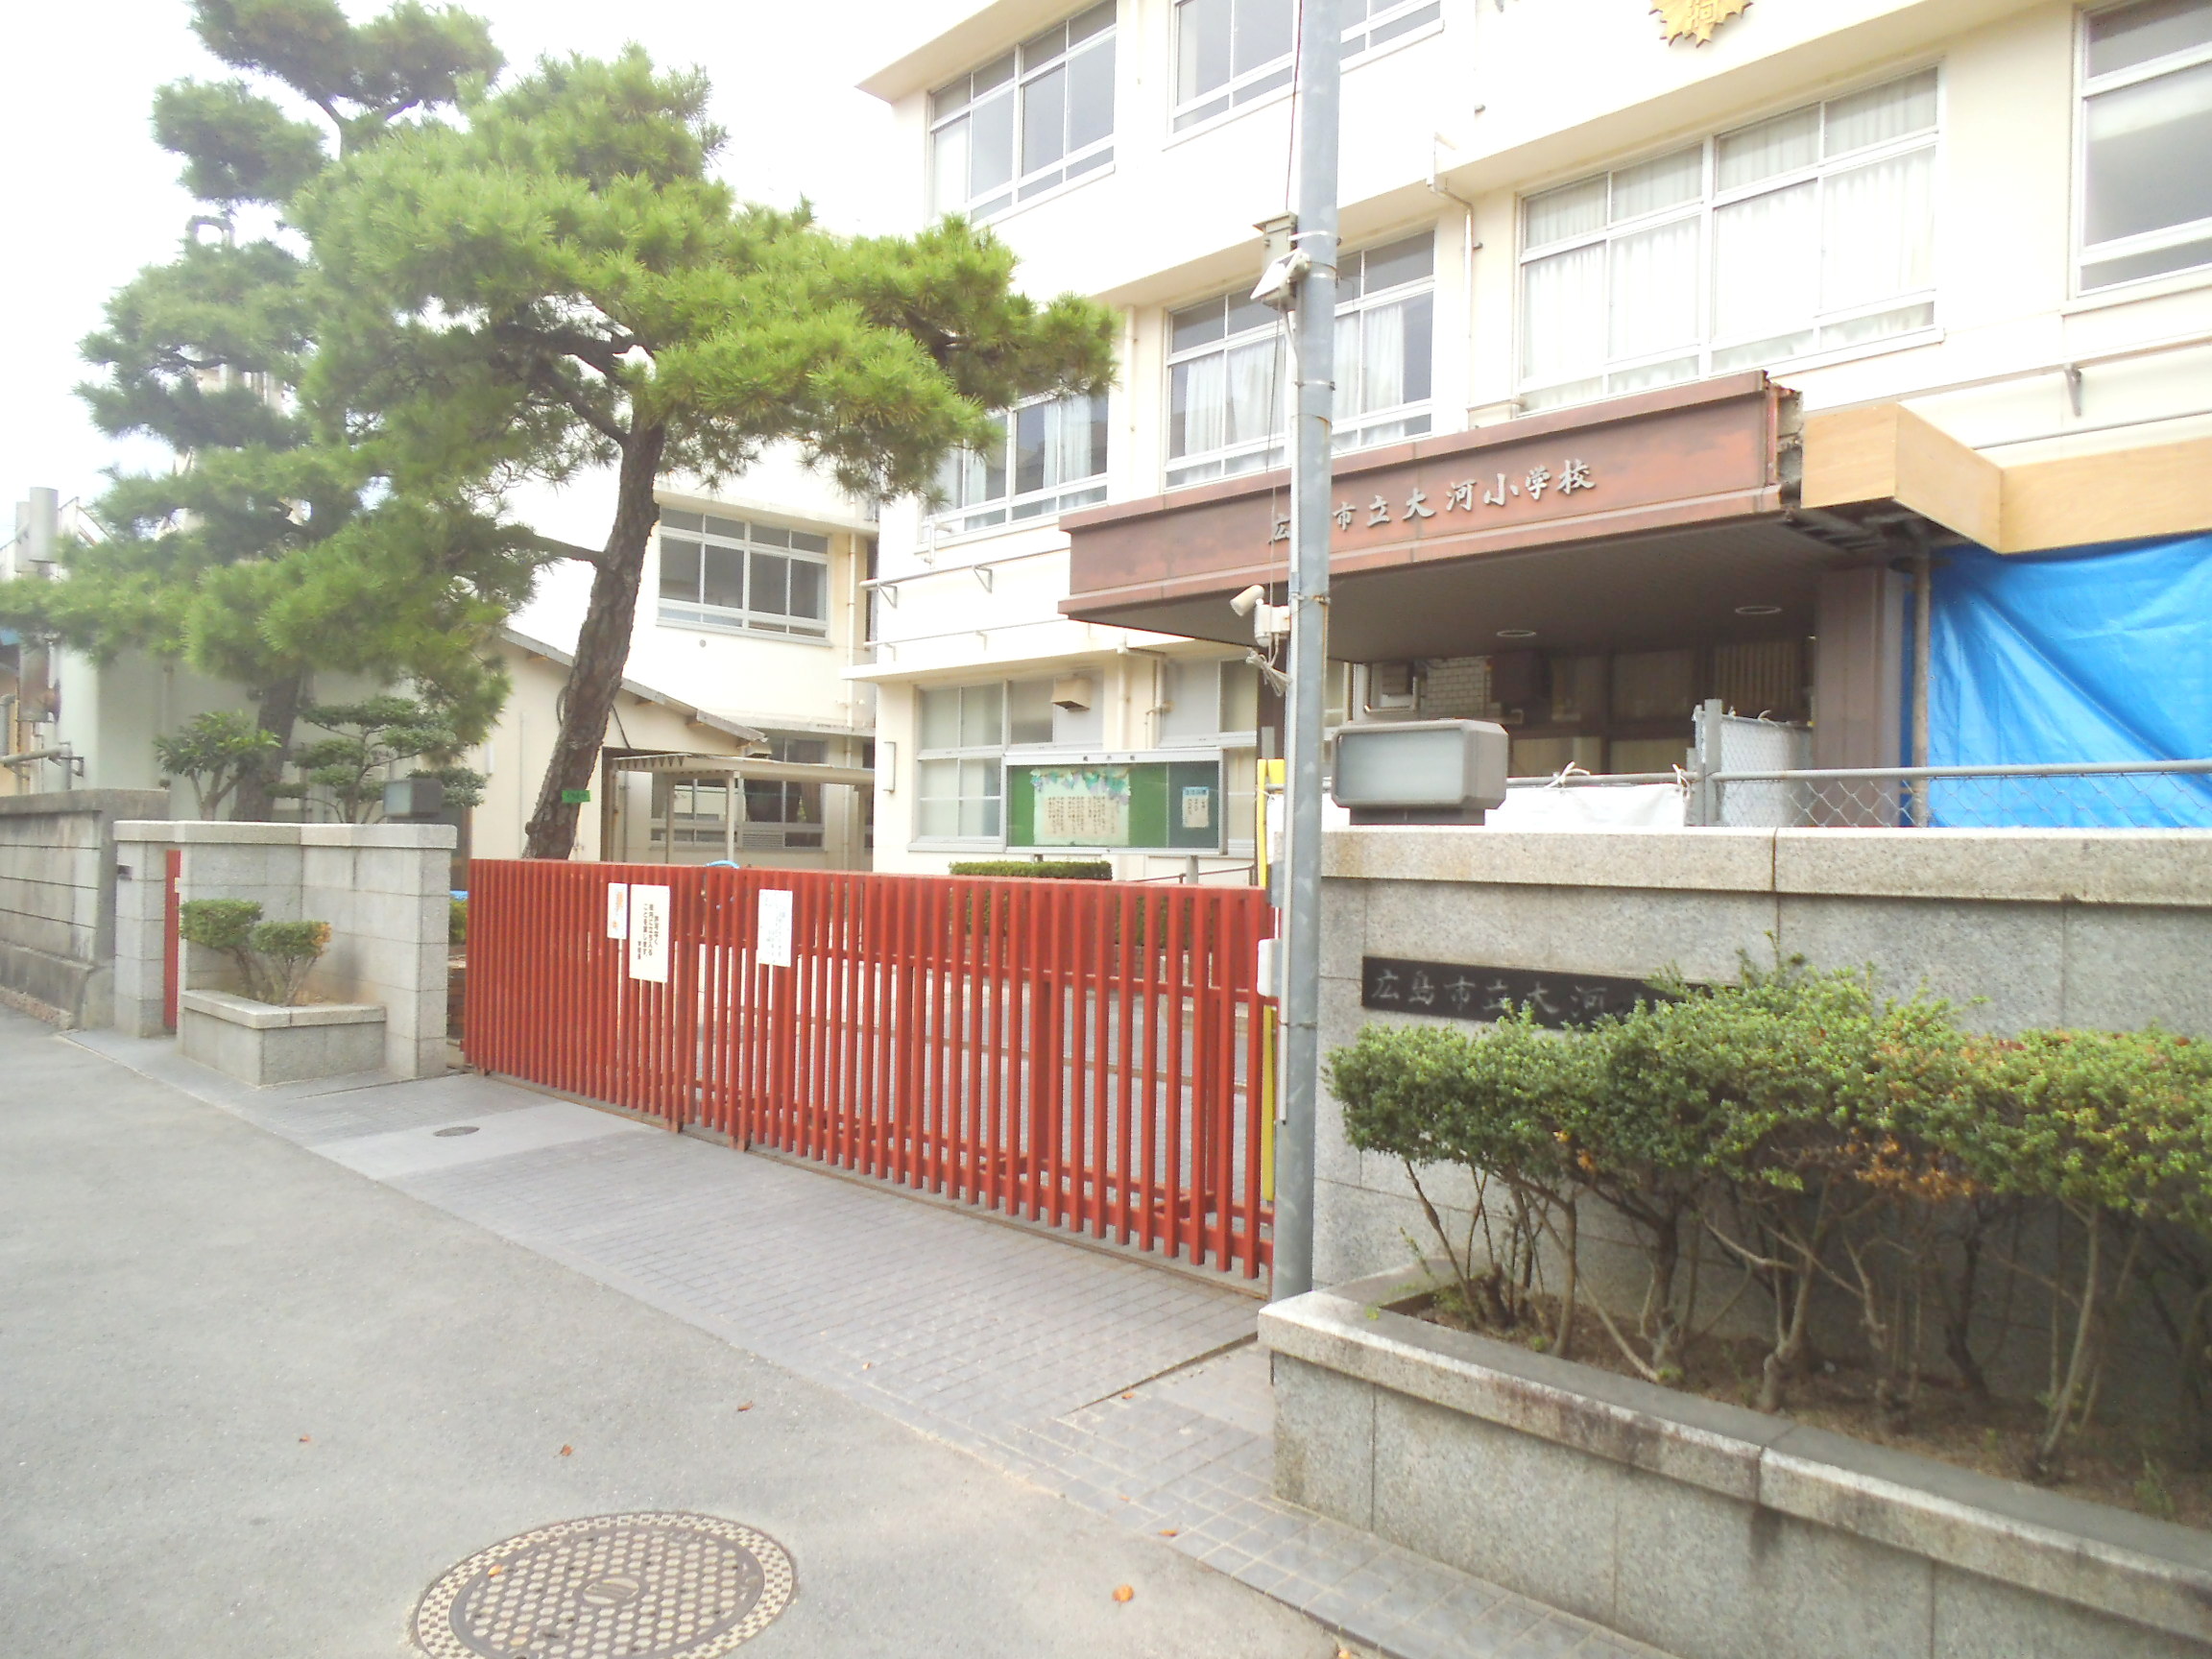 Primary school. 547m to Hiroshima City Museum of taiga elementary school (elementary school)